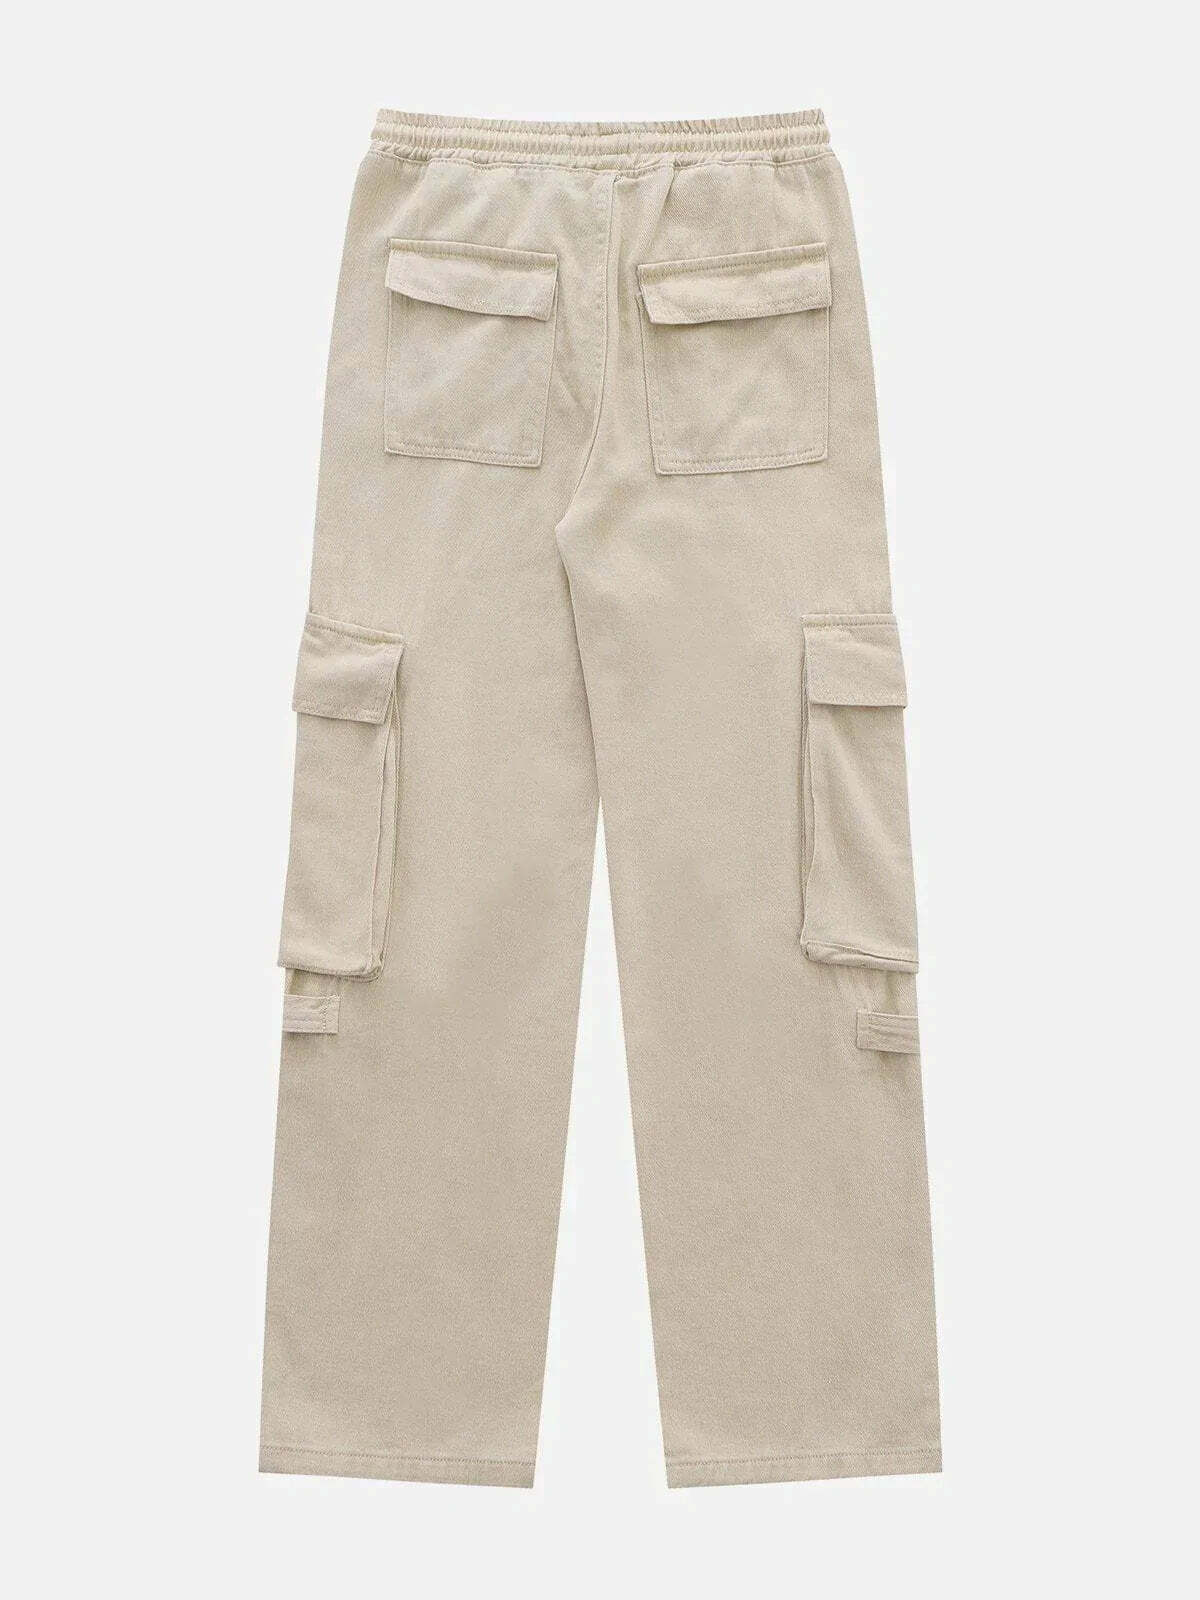 retro zipup pants edgy & vibrant streetwear 1333